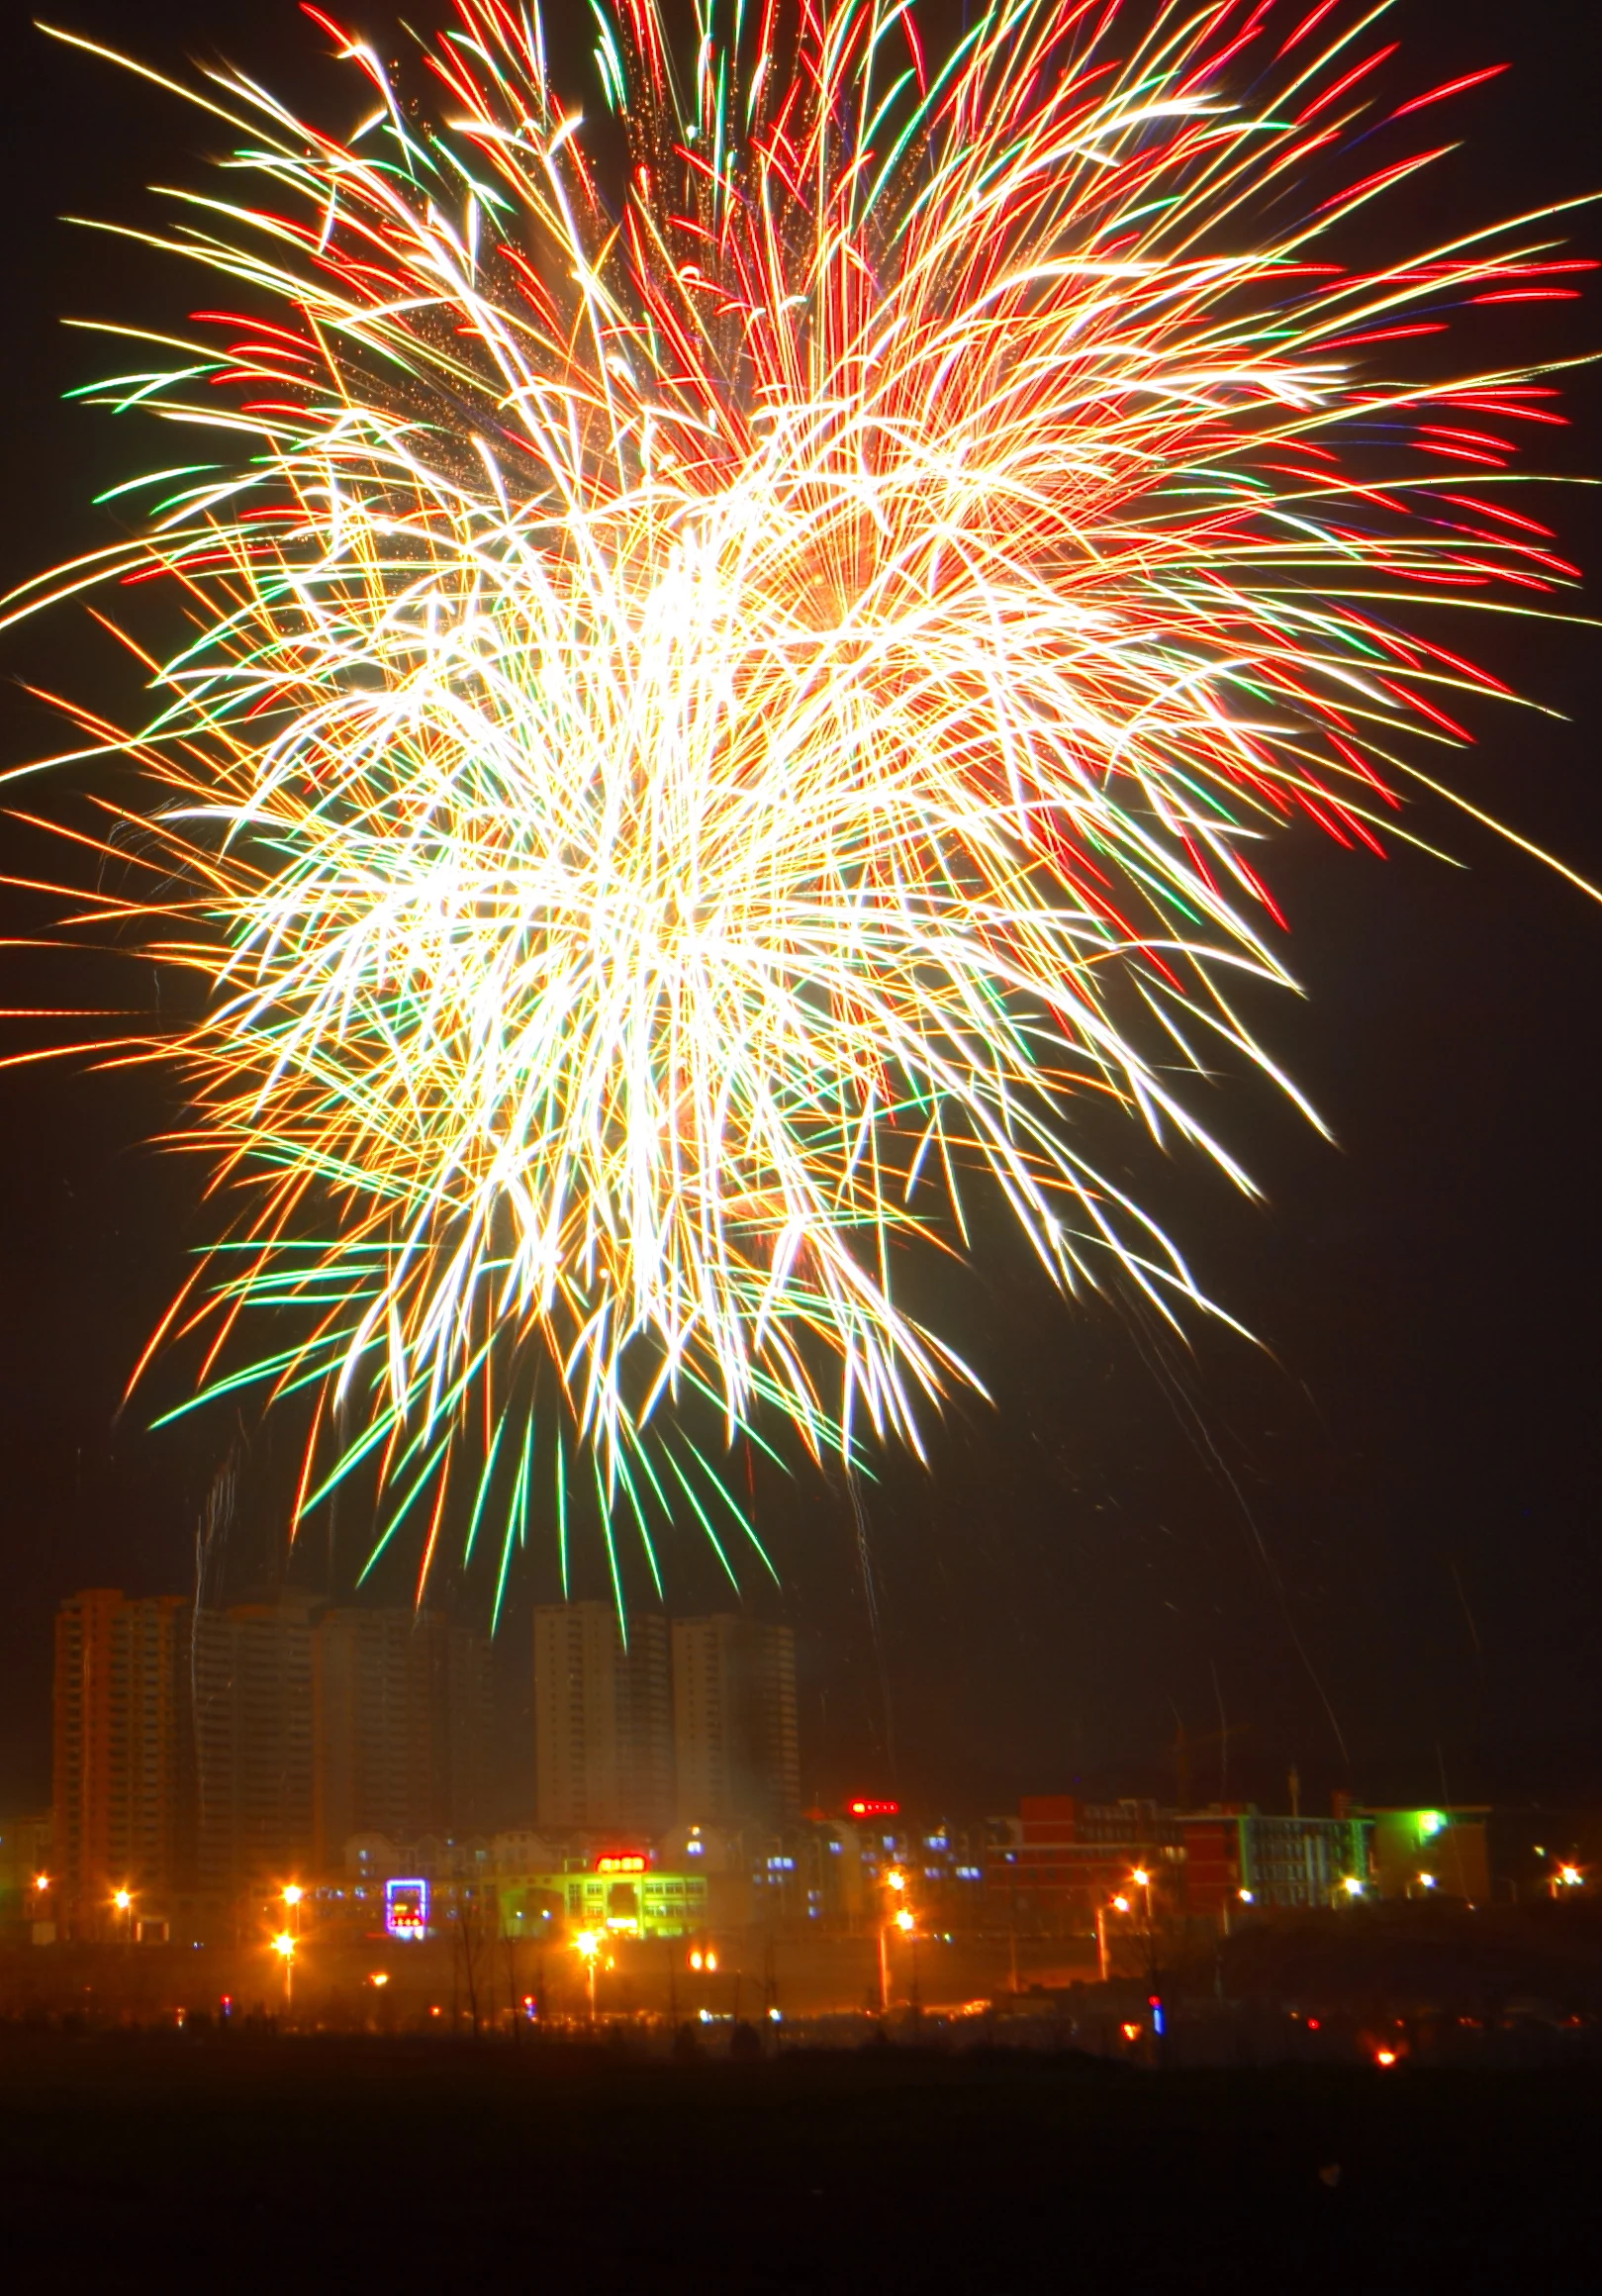 July 4th Fireworks Displays in Buffalo